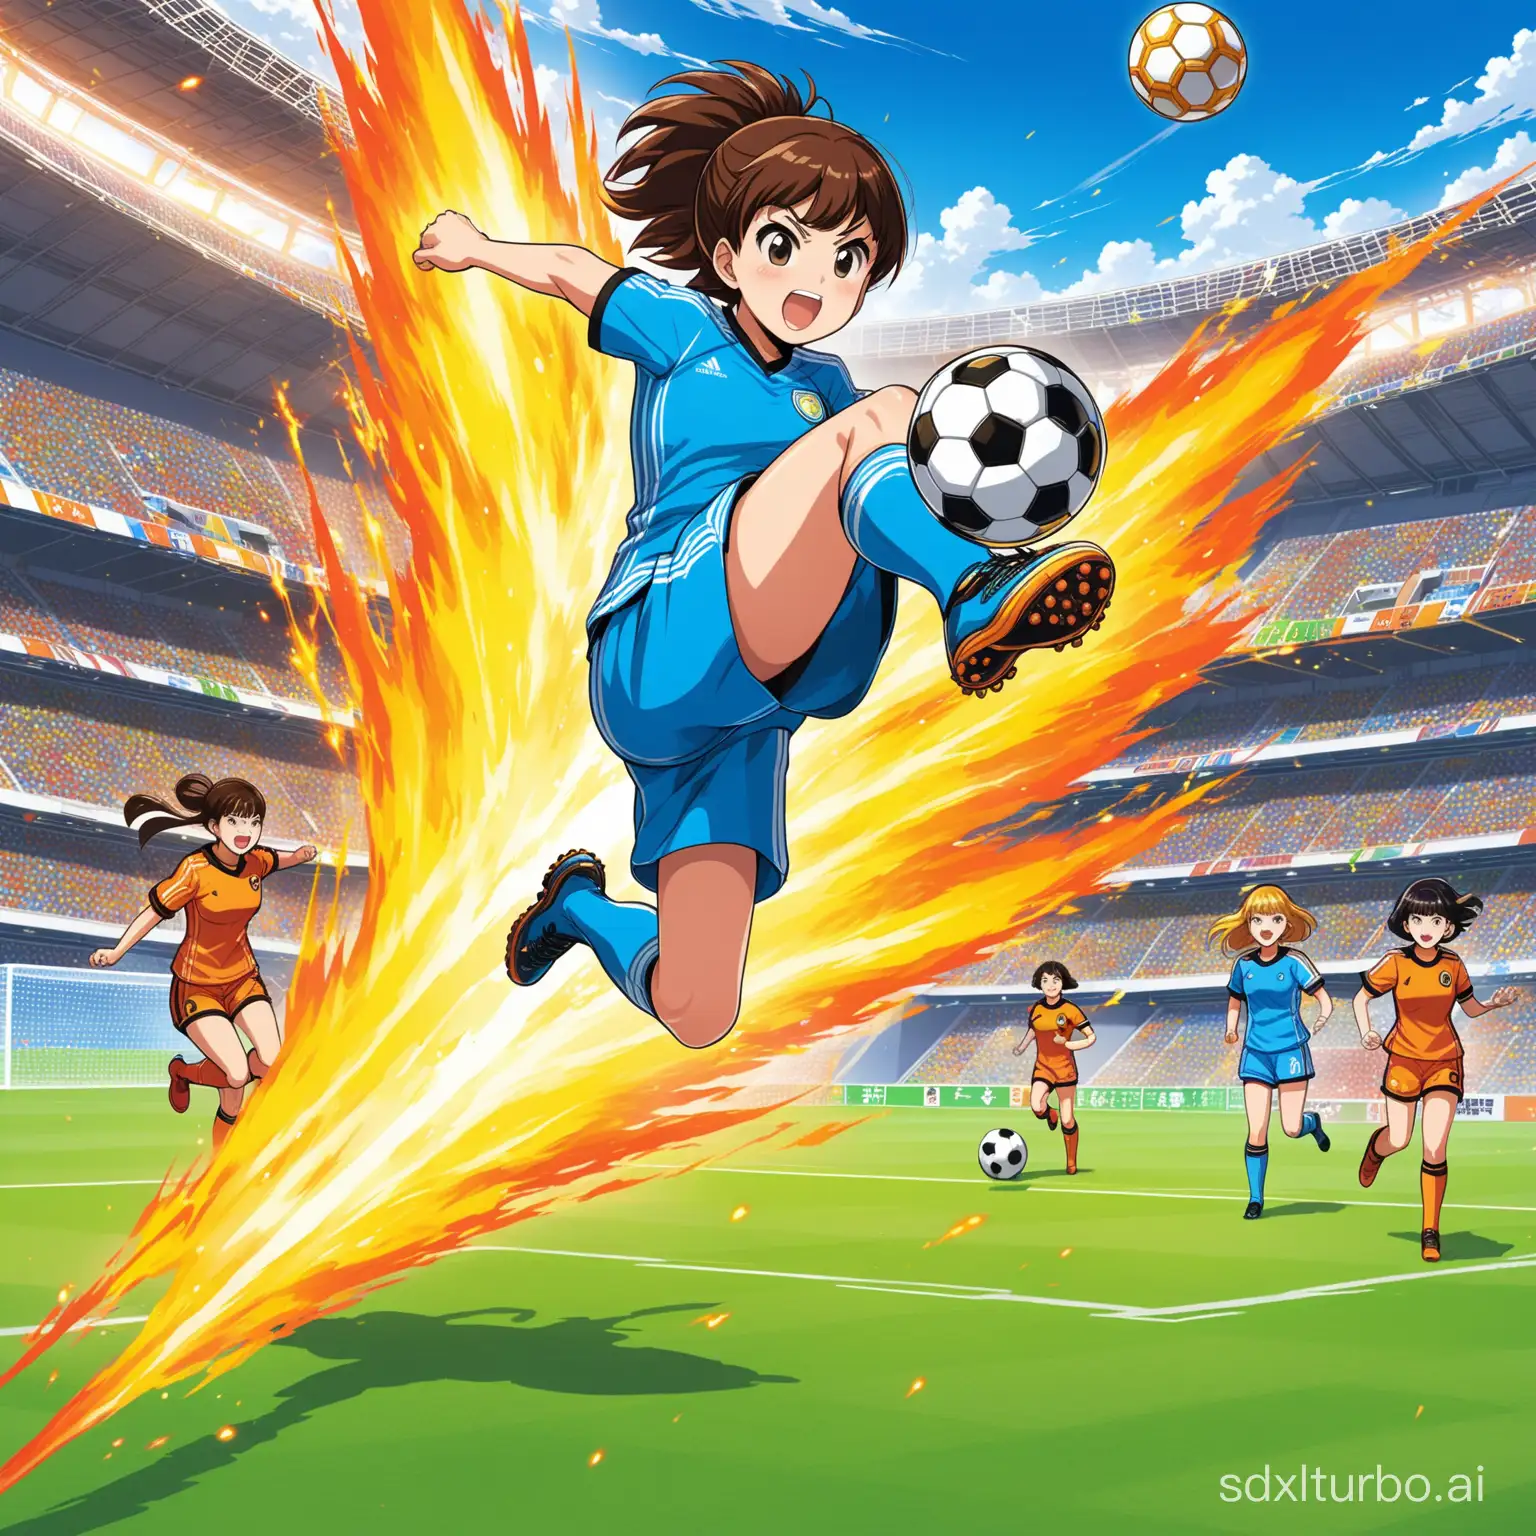 Dynamic-Super-Shot-Soccer-Captain-Tsubasa-Girls-Ultimate-Blast